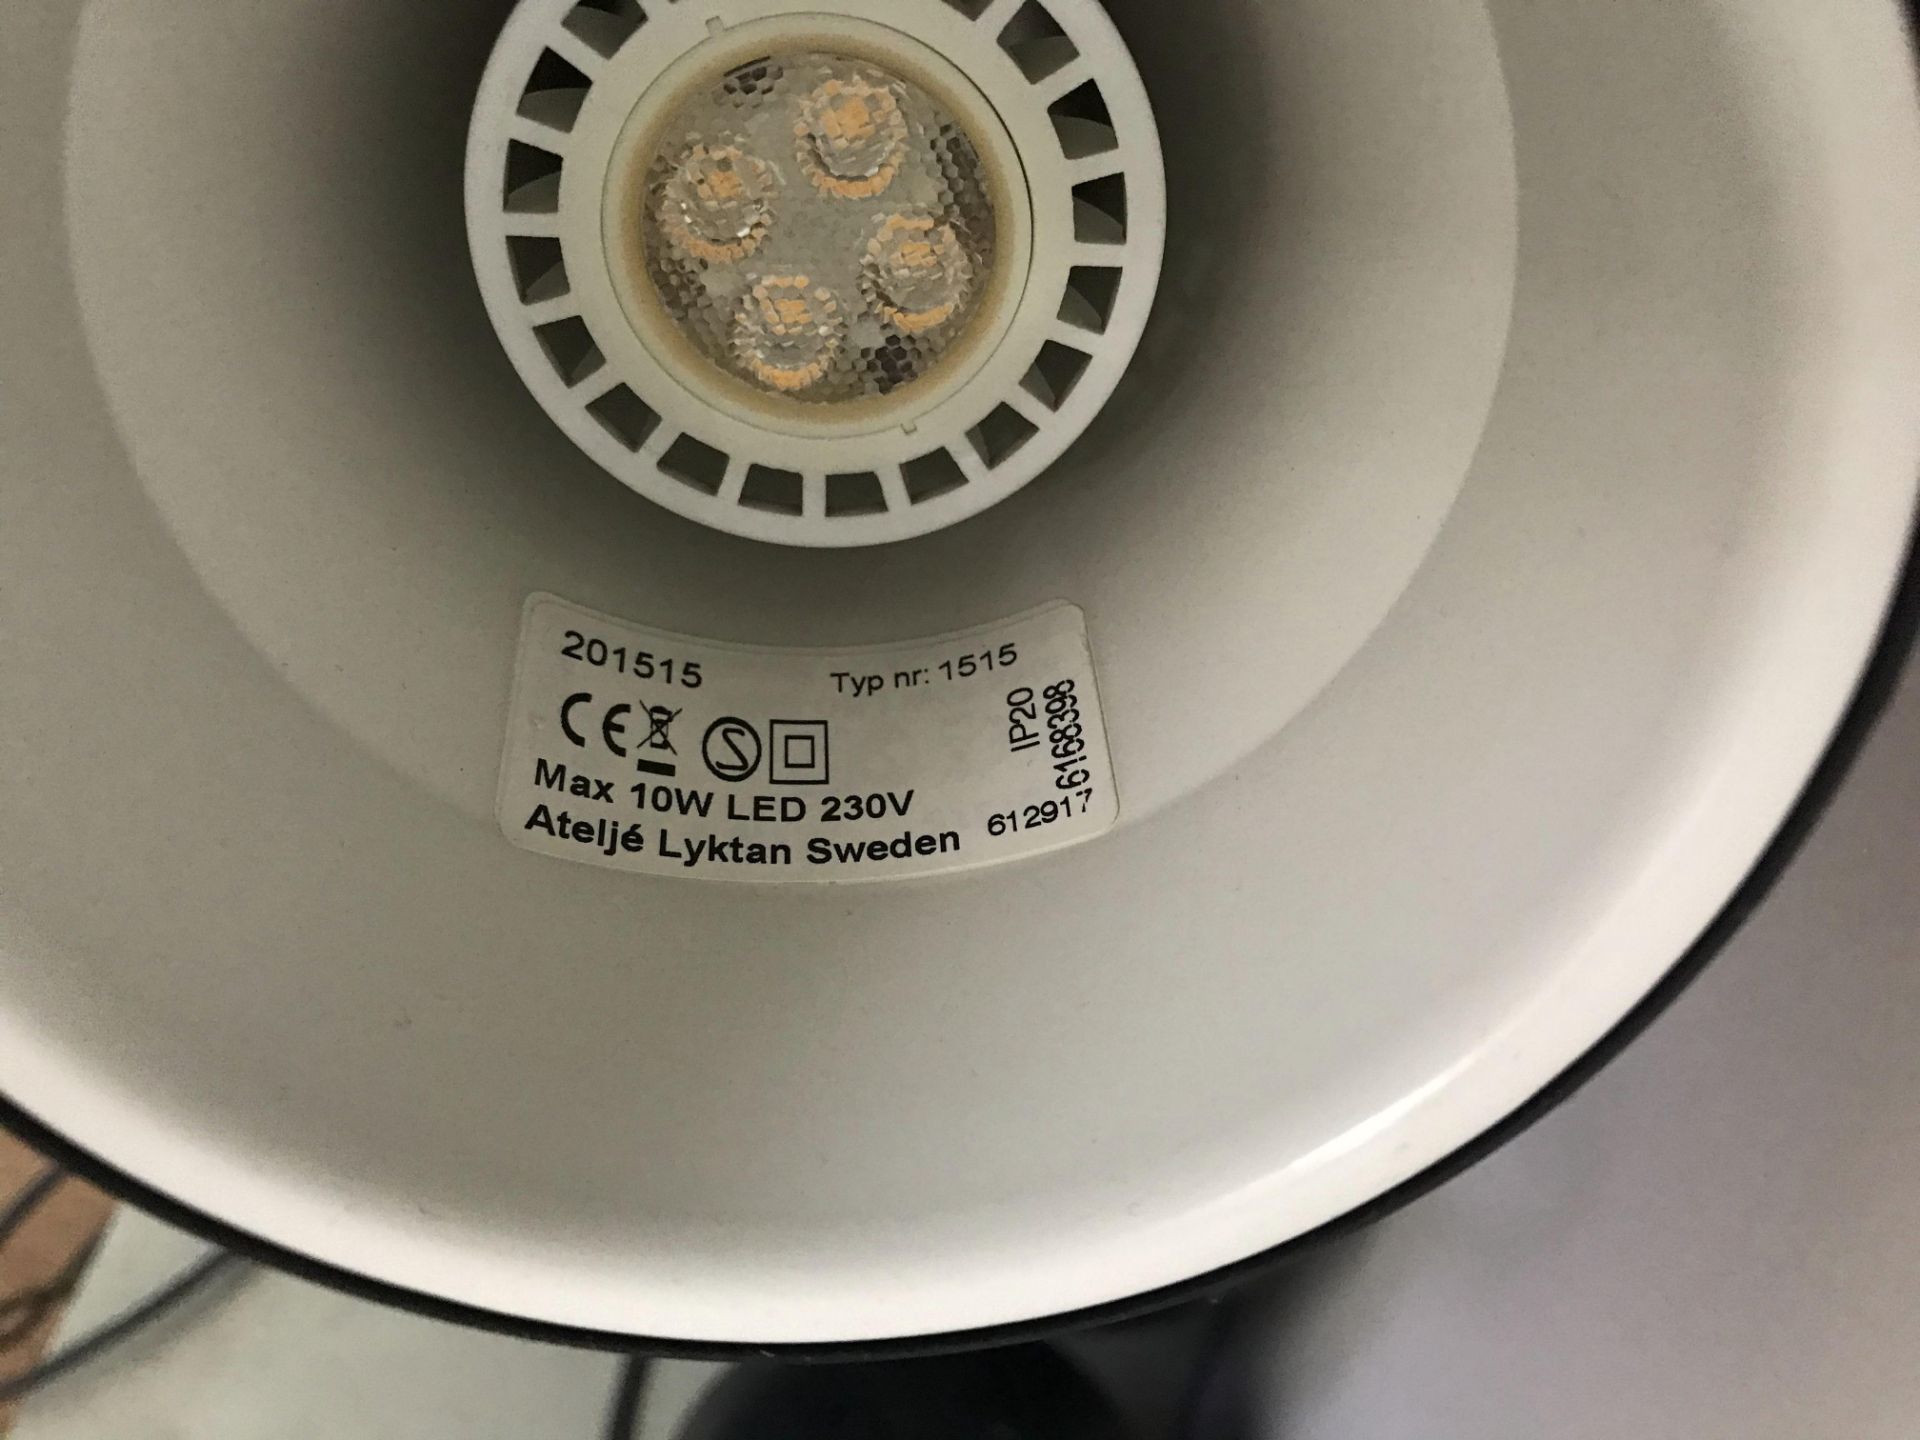 3 x Ateljé Lyktan Designer Ogle Pendant LED Lights With Die Cast Aluminium Casing - Type 201515 - - Image 2 of 3